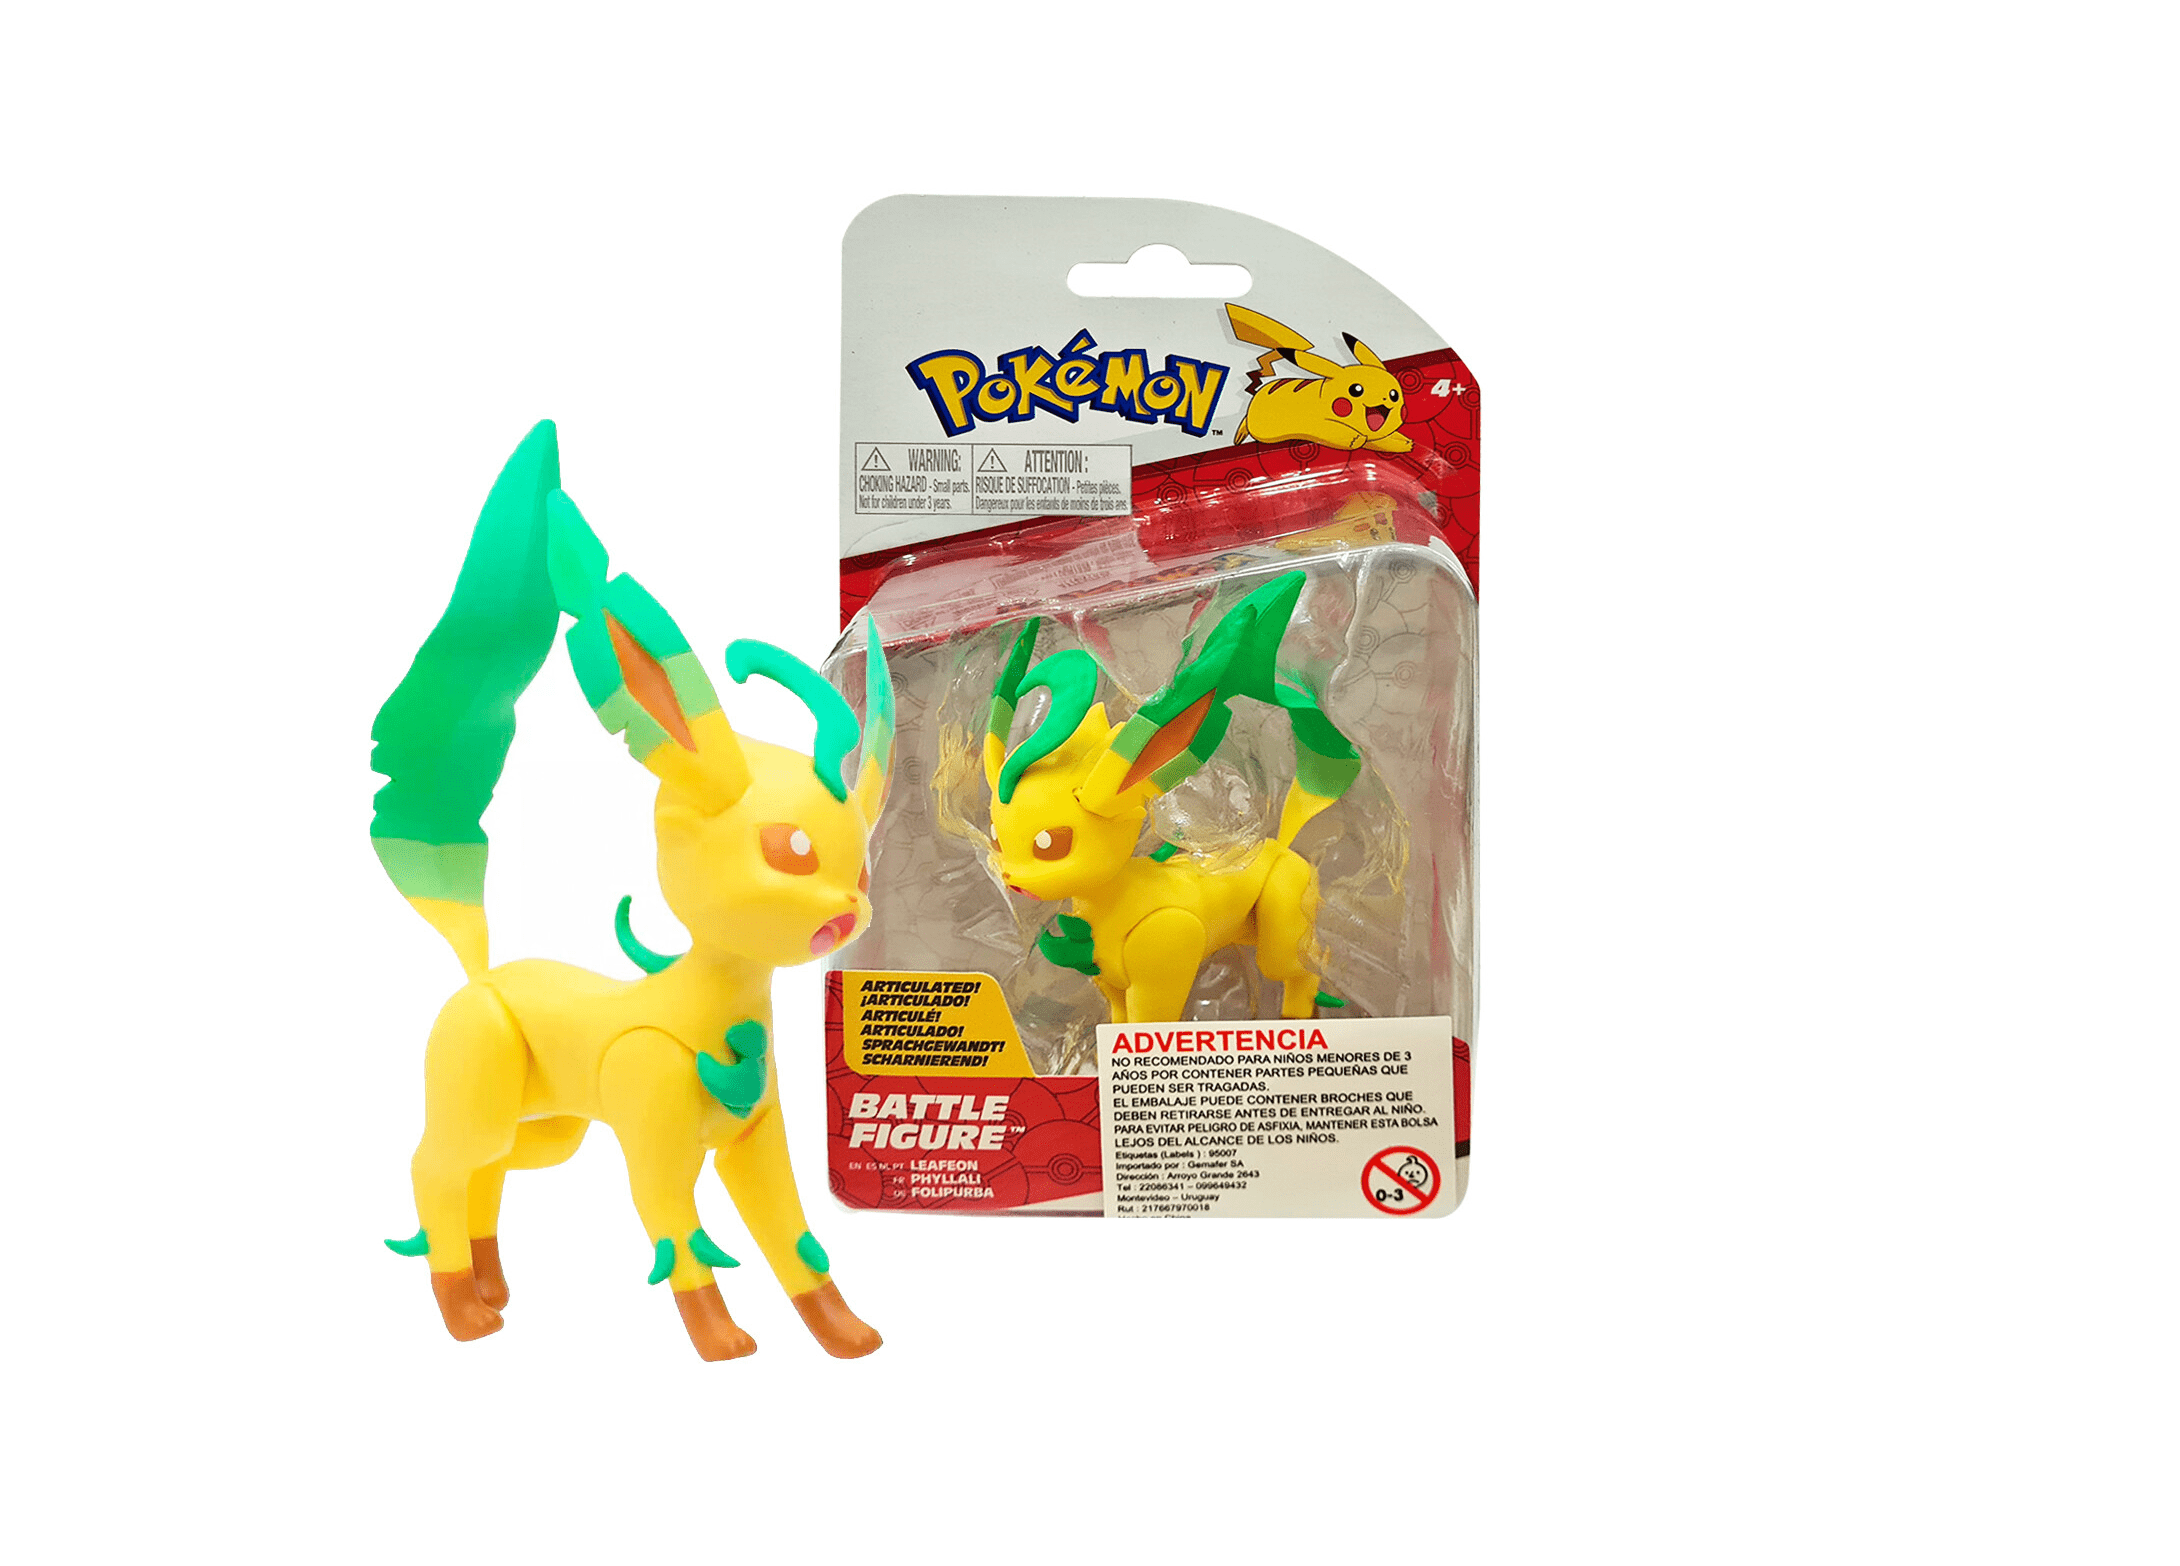 Pokémon -Leafeon Battle Figure